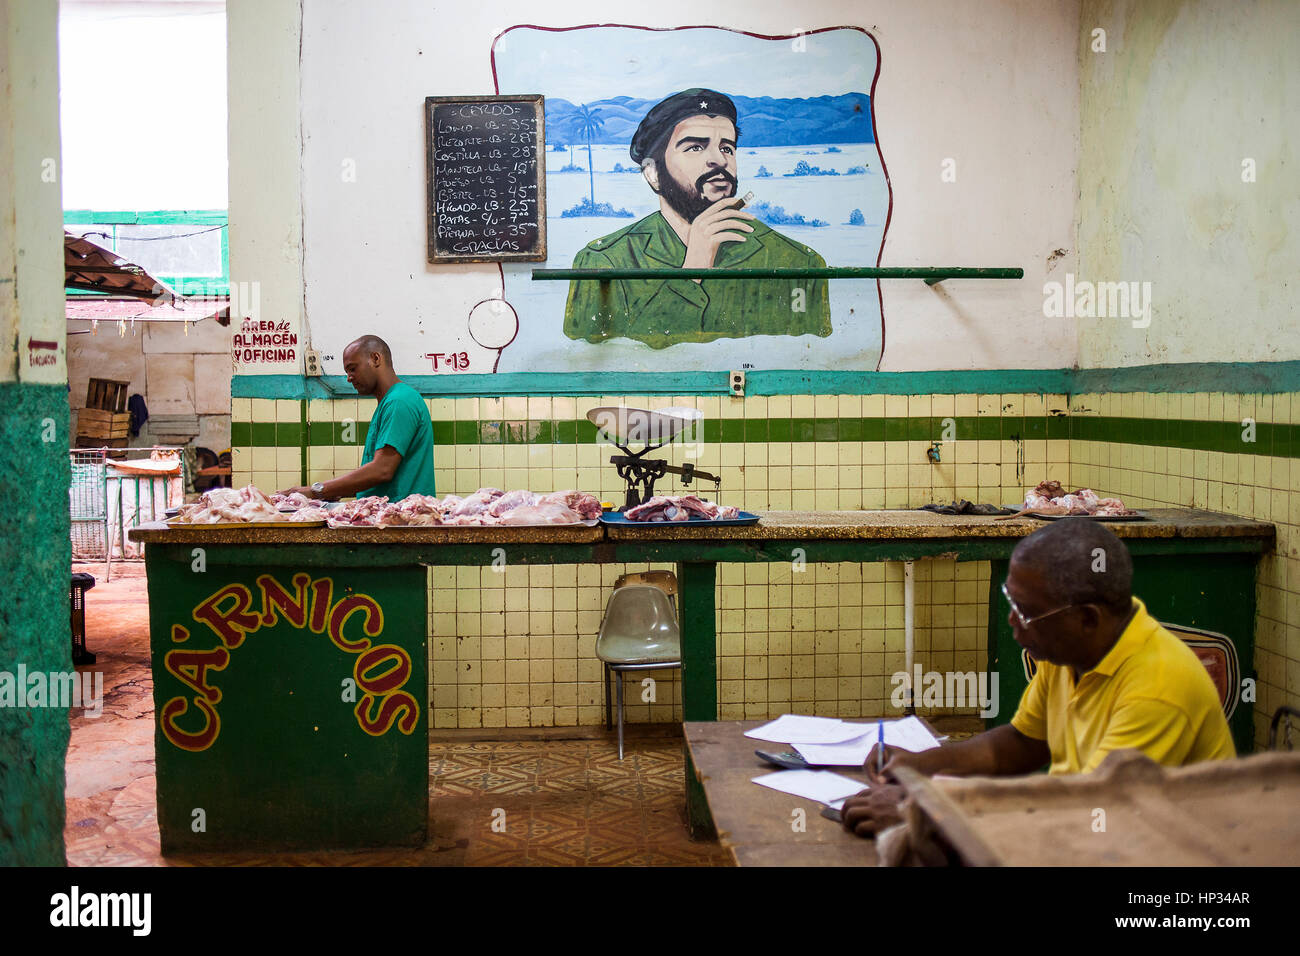 Butcher shop, seller and man accounting, in Old Havana, Habana Vieja, La Habana, Cuba Stock Photo